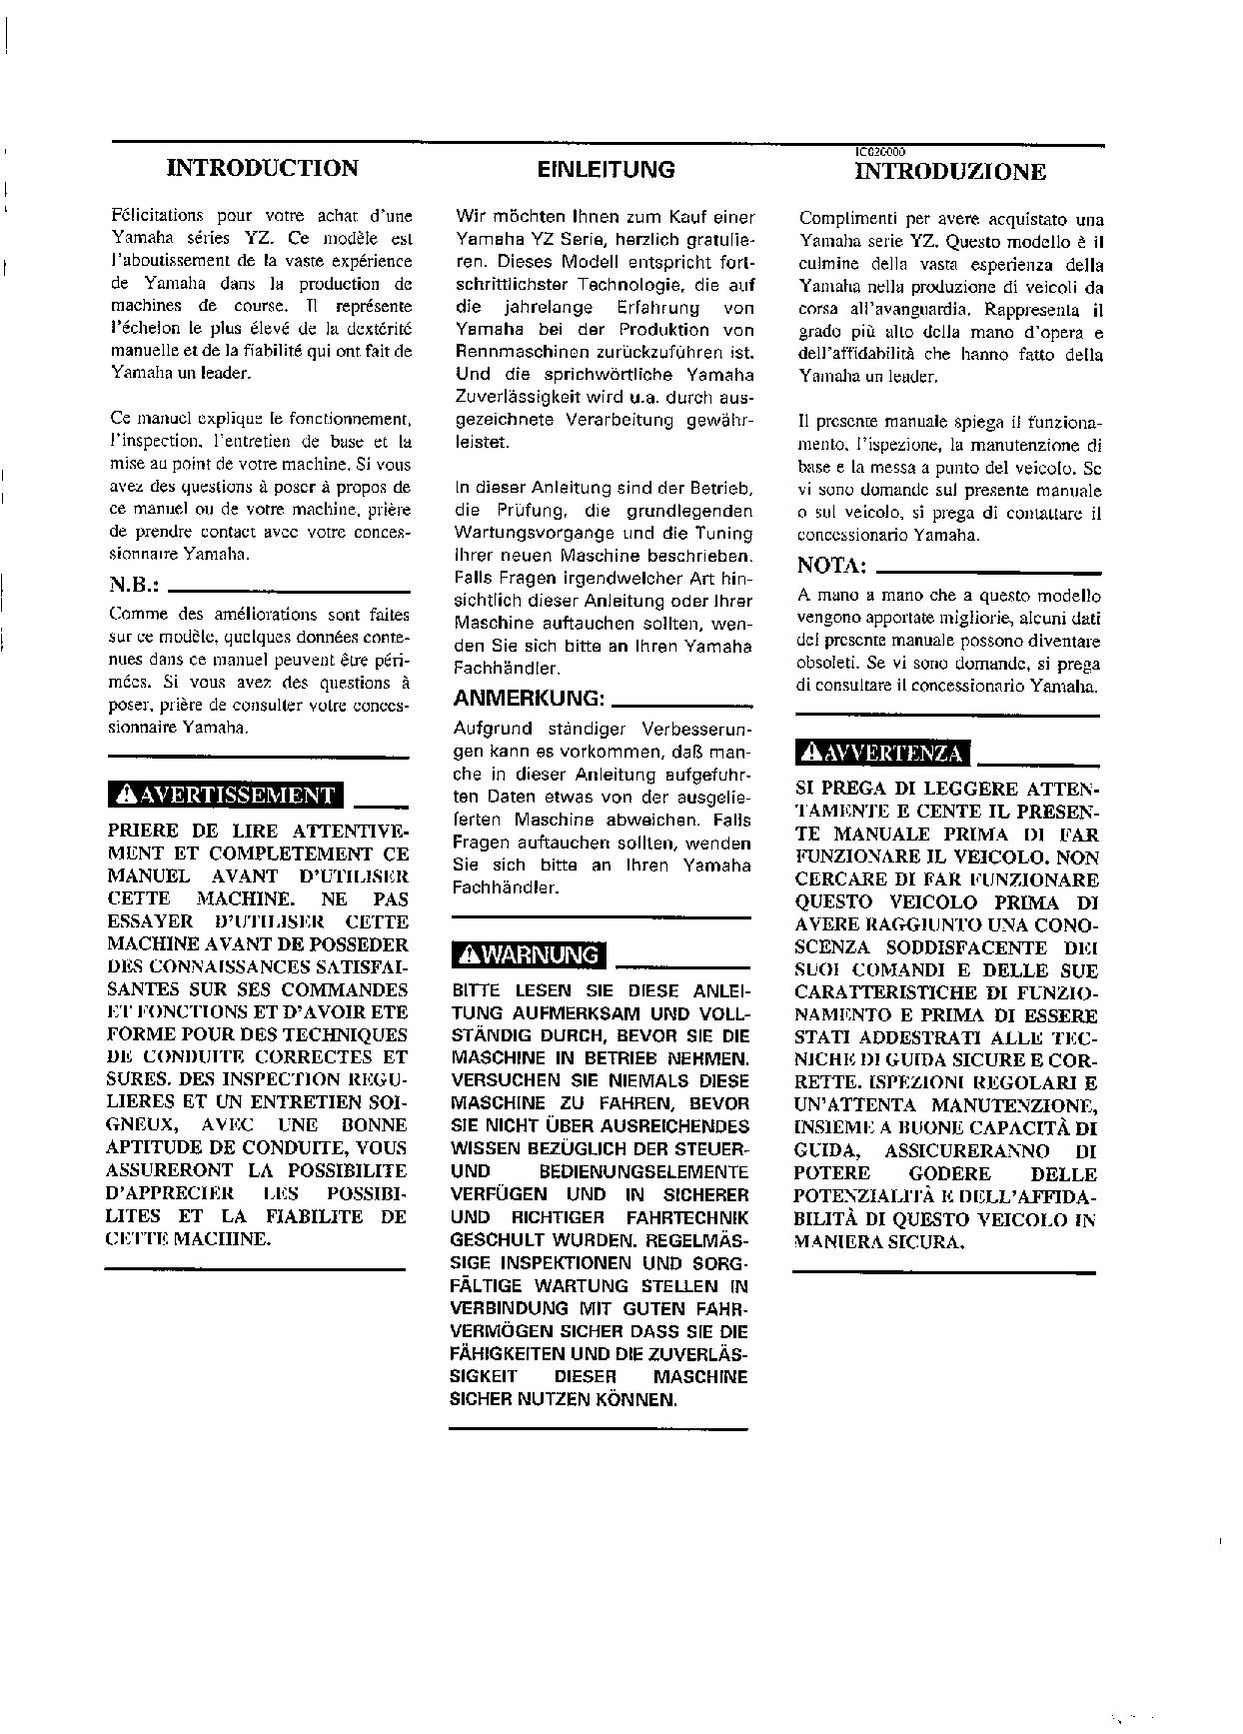 File:2000 Yamaha YZ125 (M) LC Owners Service Manual.pdf